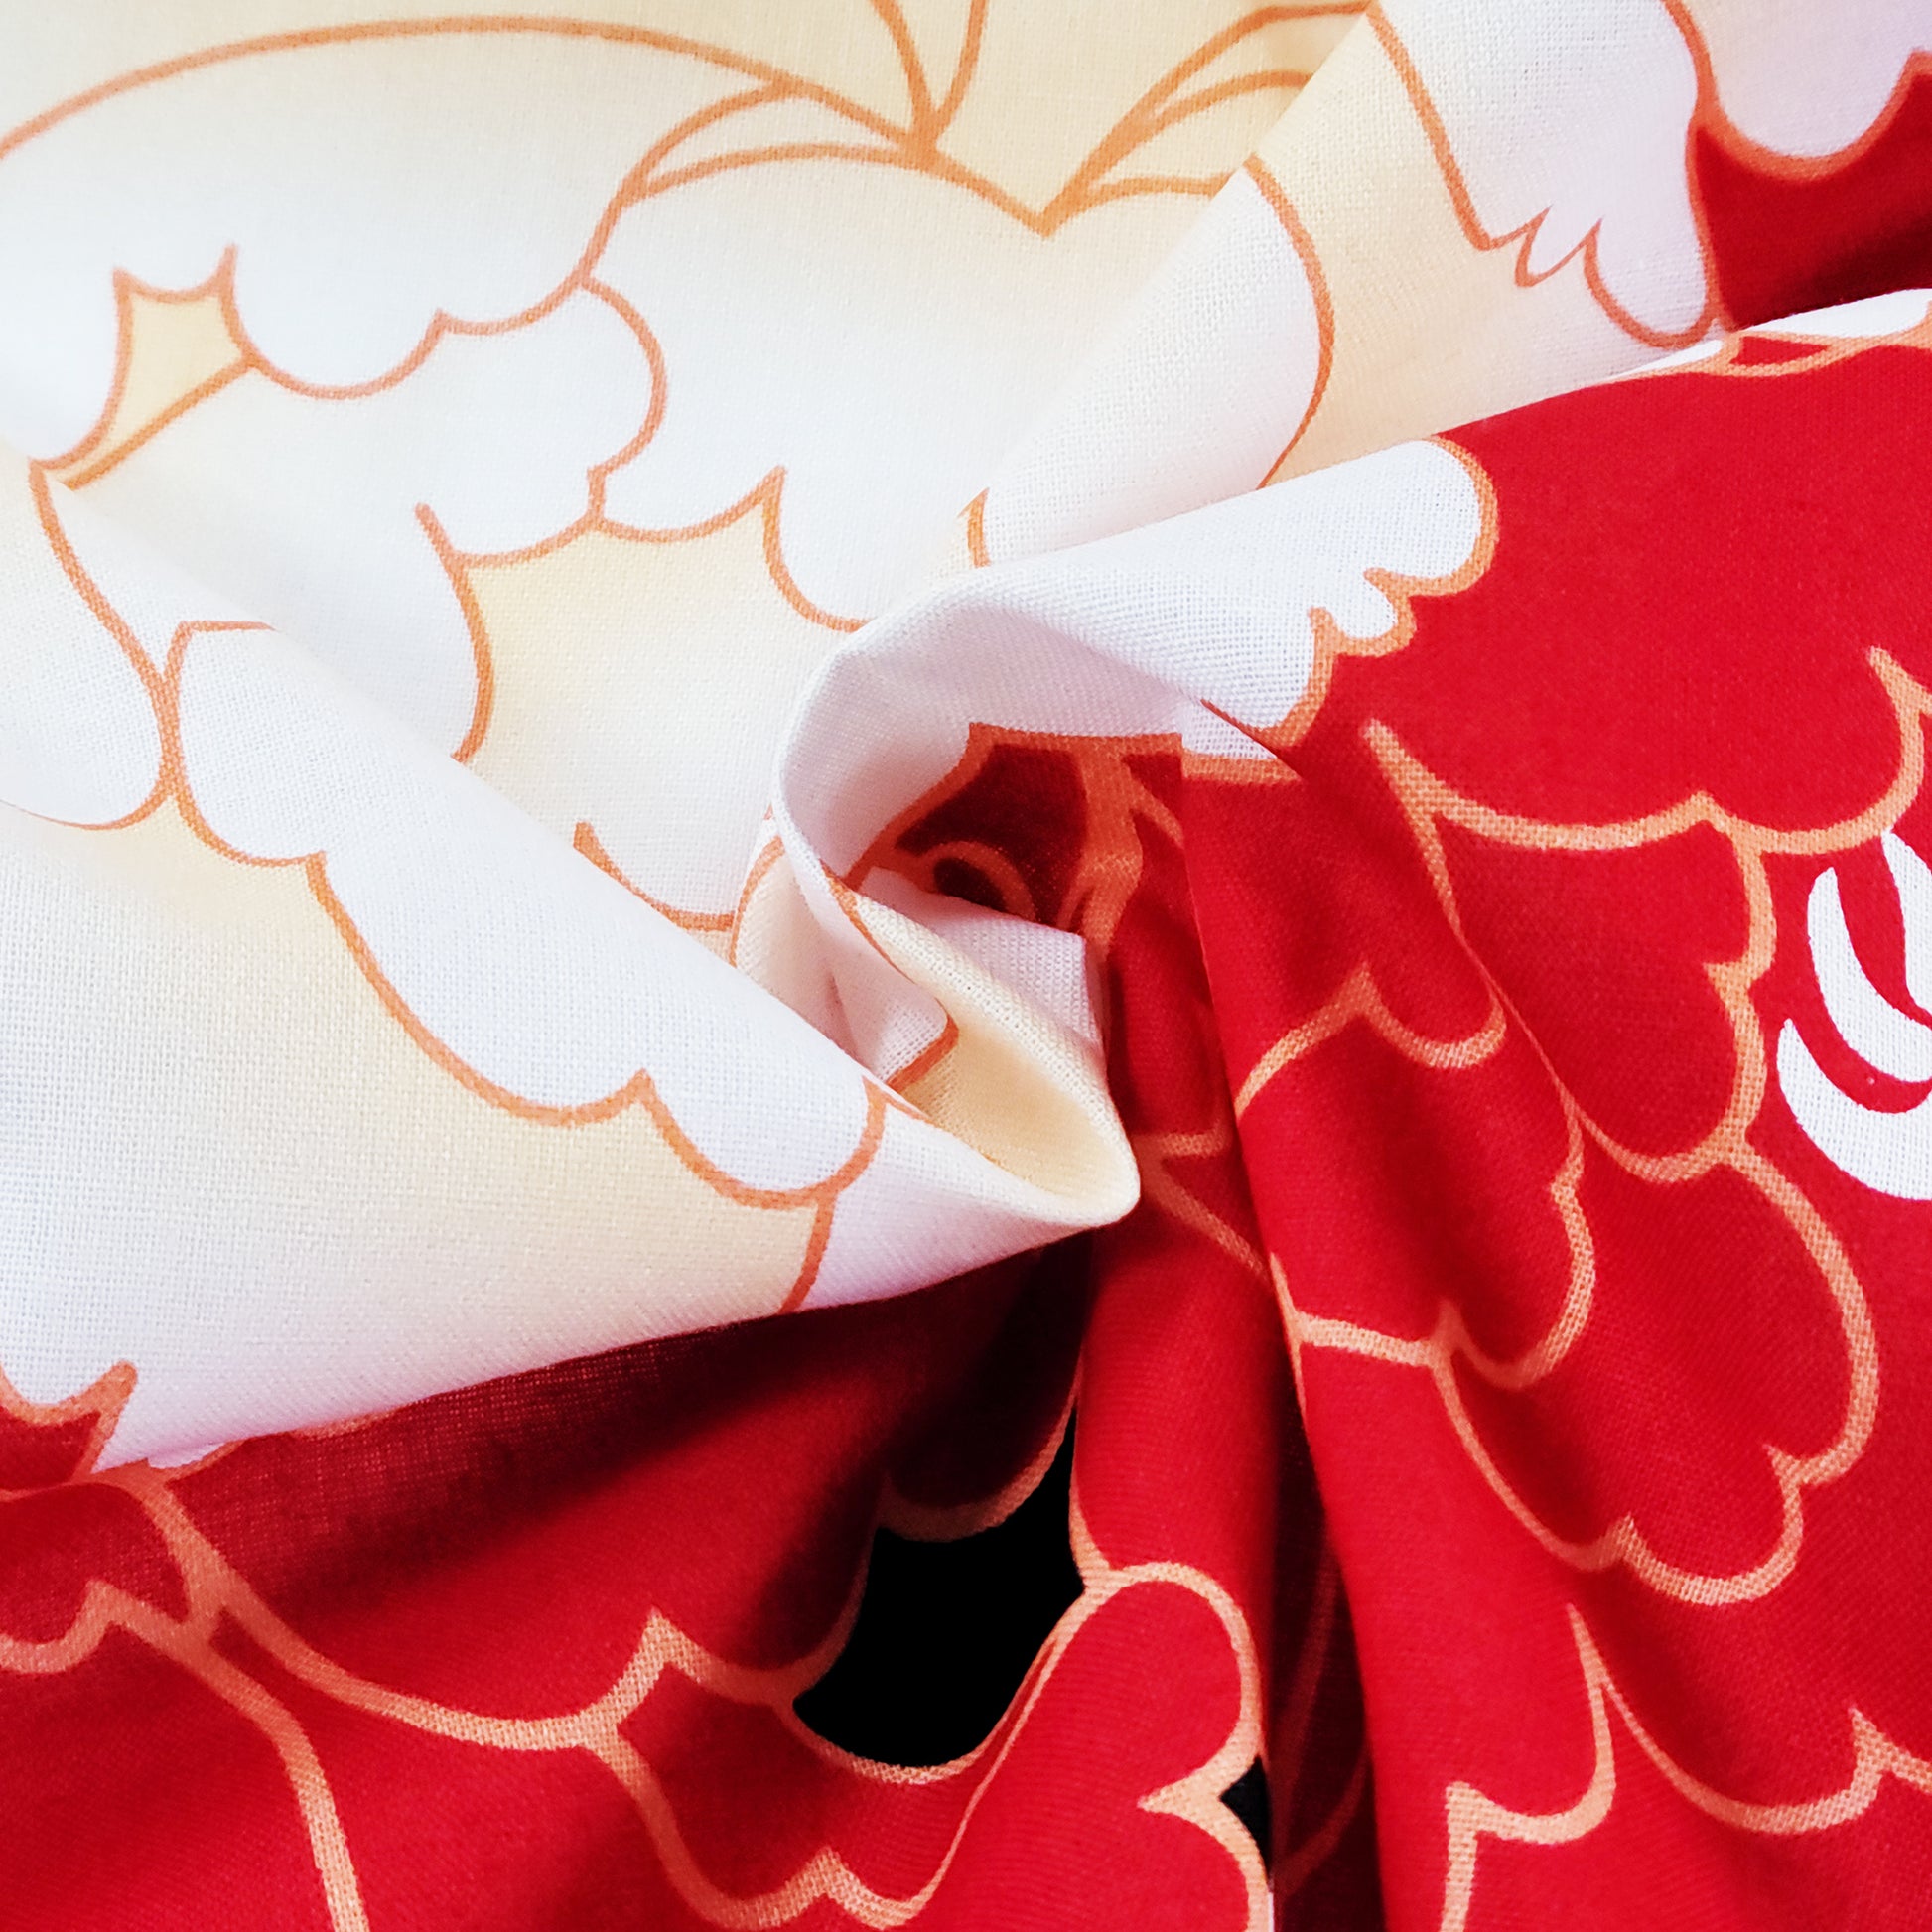 Women's Japanese Traditional Yukata Kimono - Chrysanthemum Red